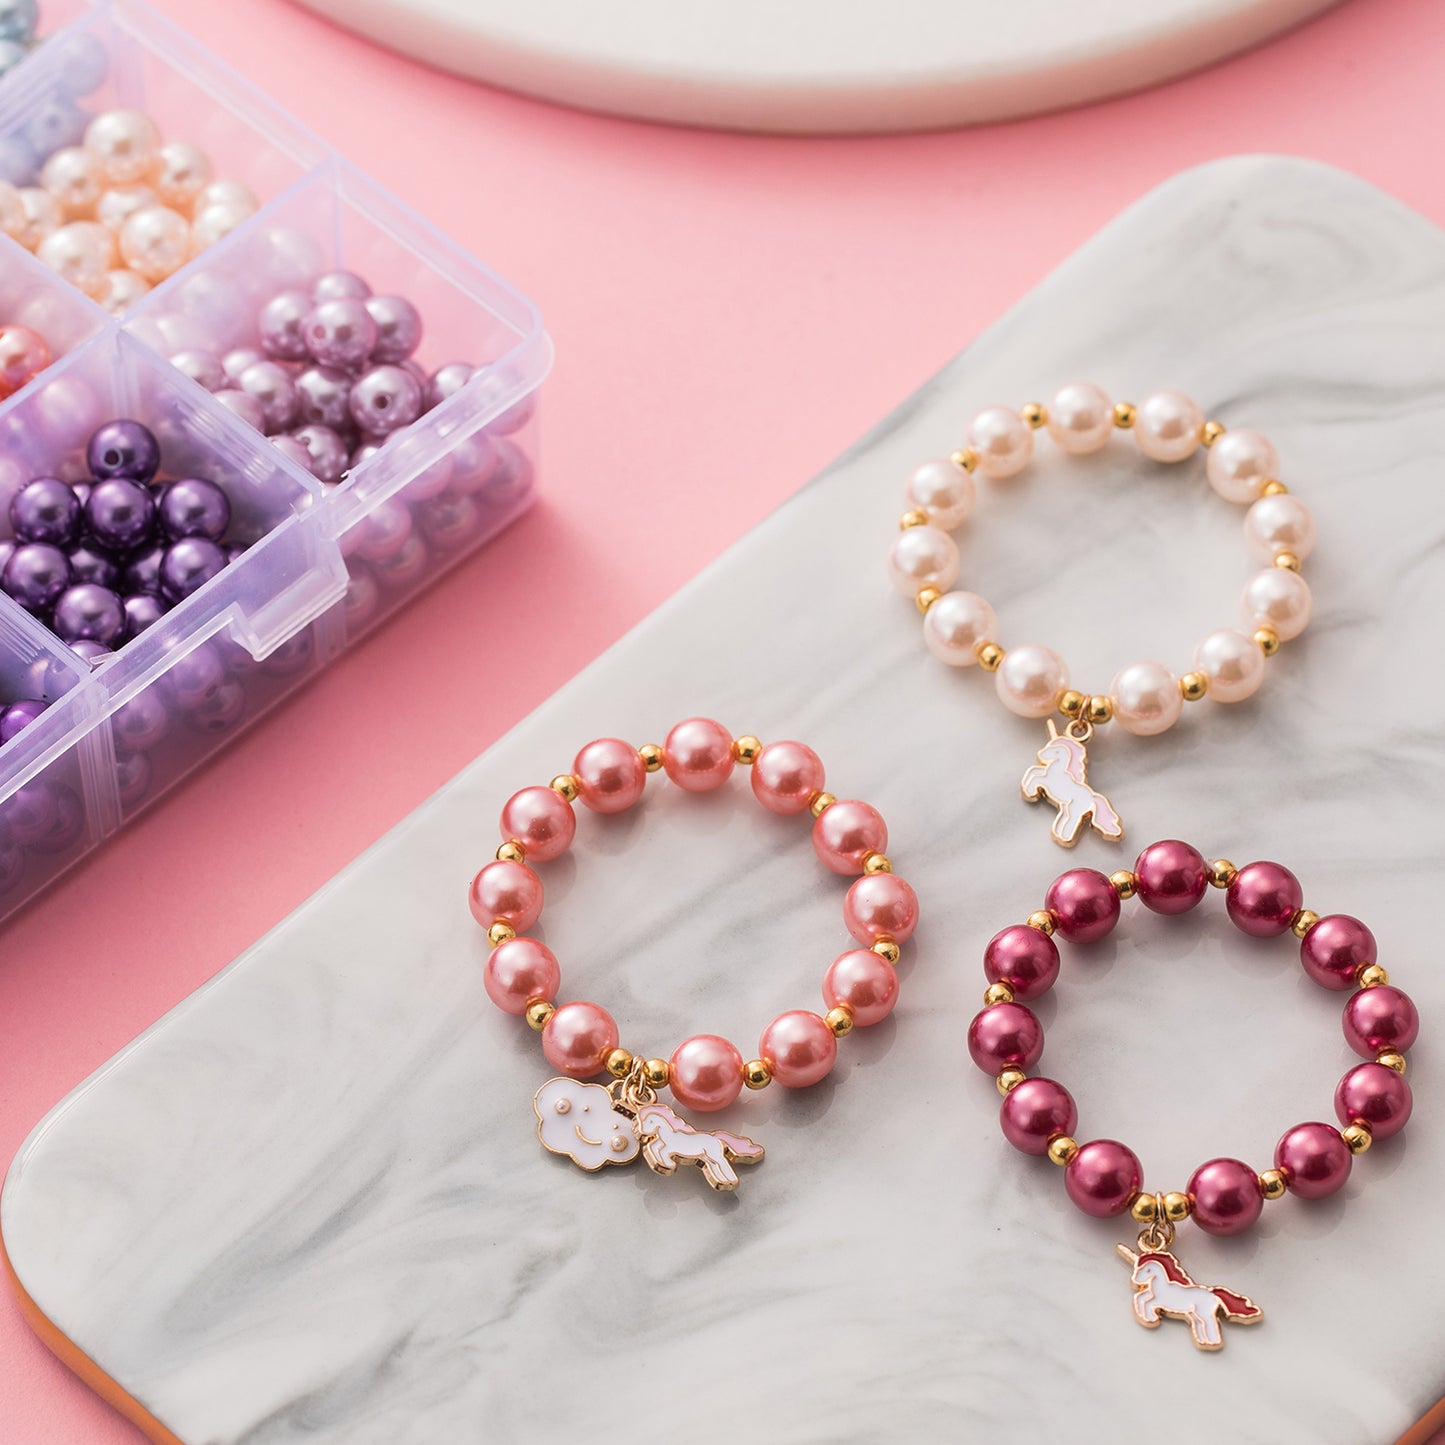  Bracelet Making Kit for Girls- Teen Girl Gifts Jewelry